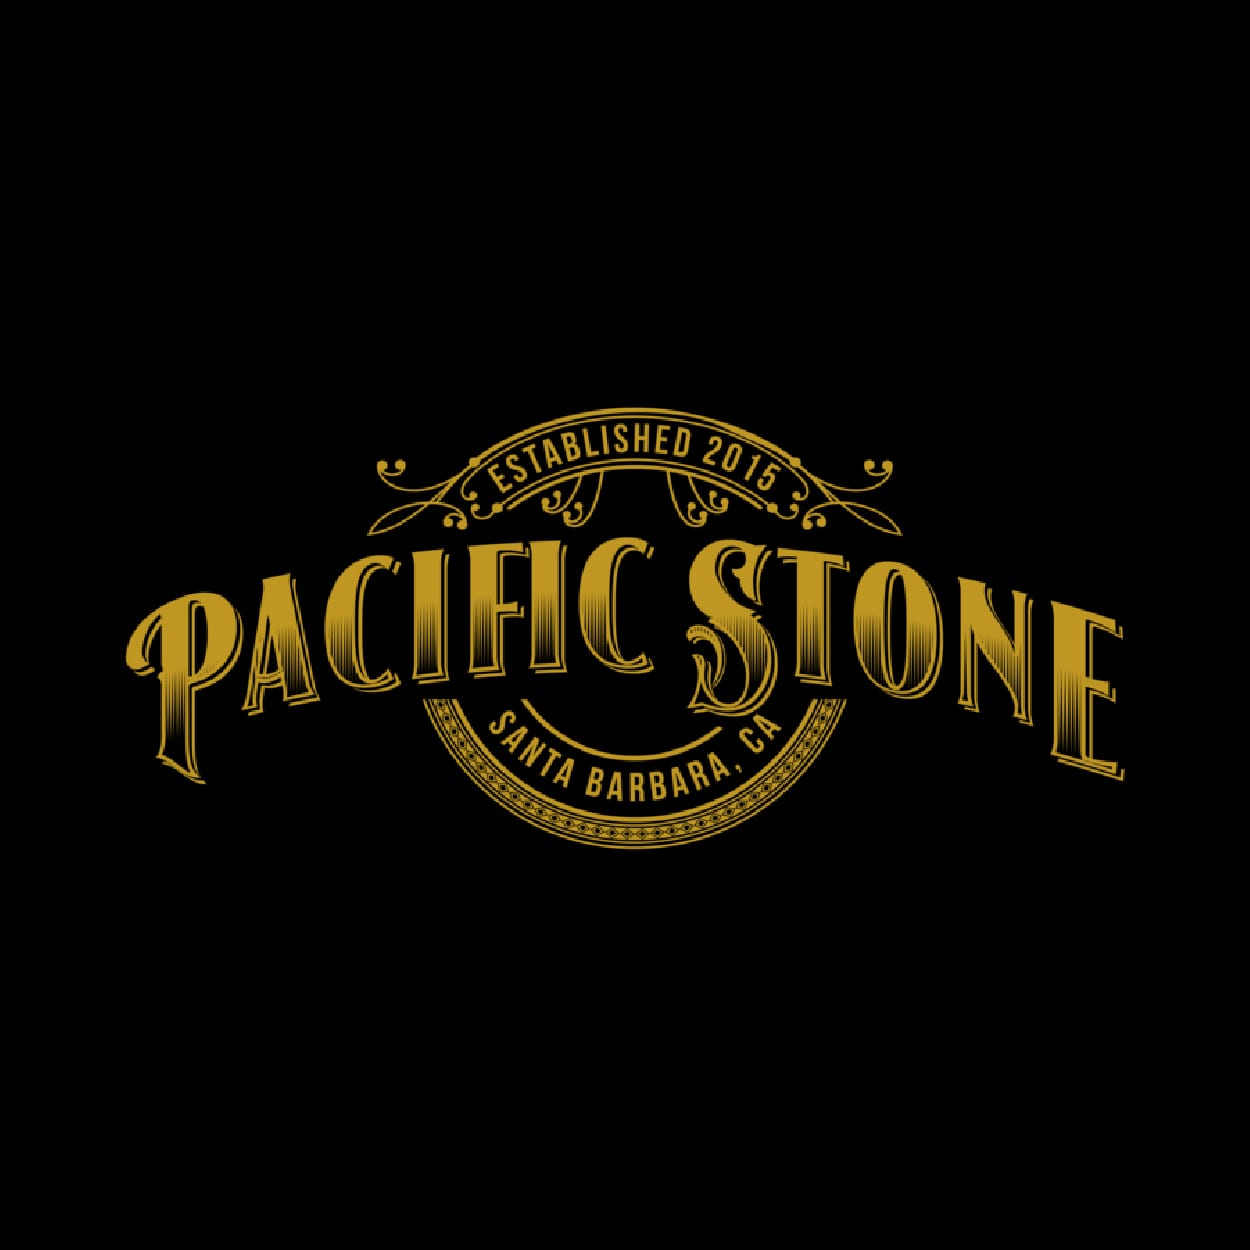 Pacific Stone California weed Dispensary